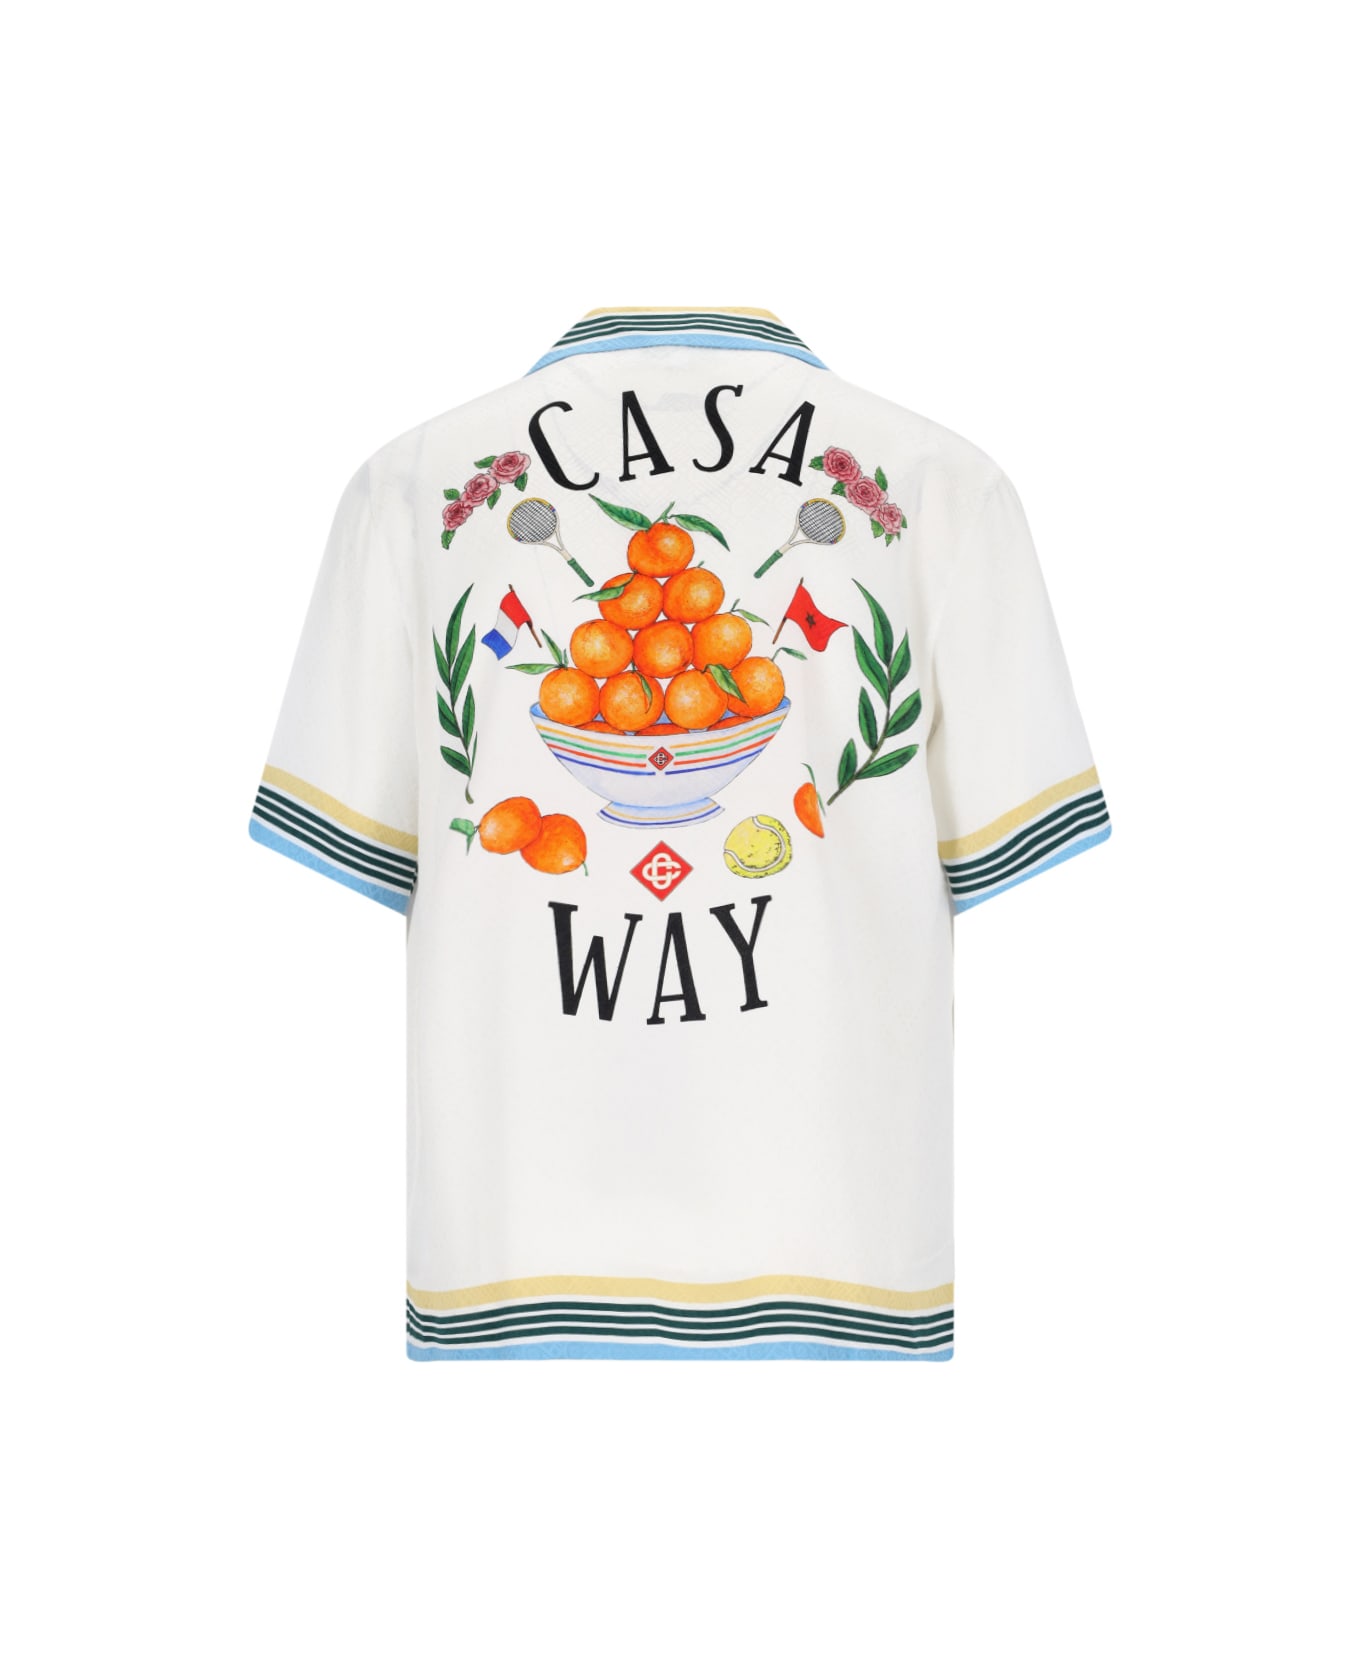 Casablanca 'casa Way' Shirt - White